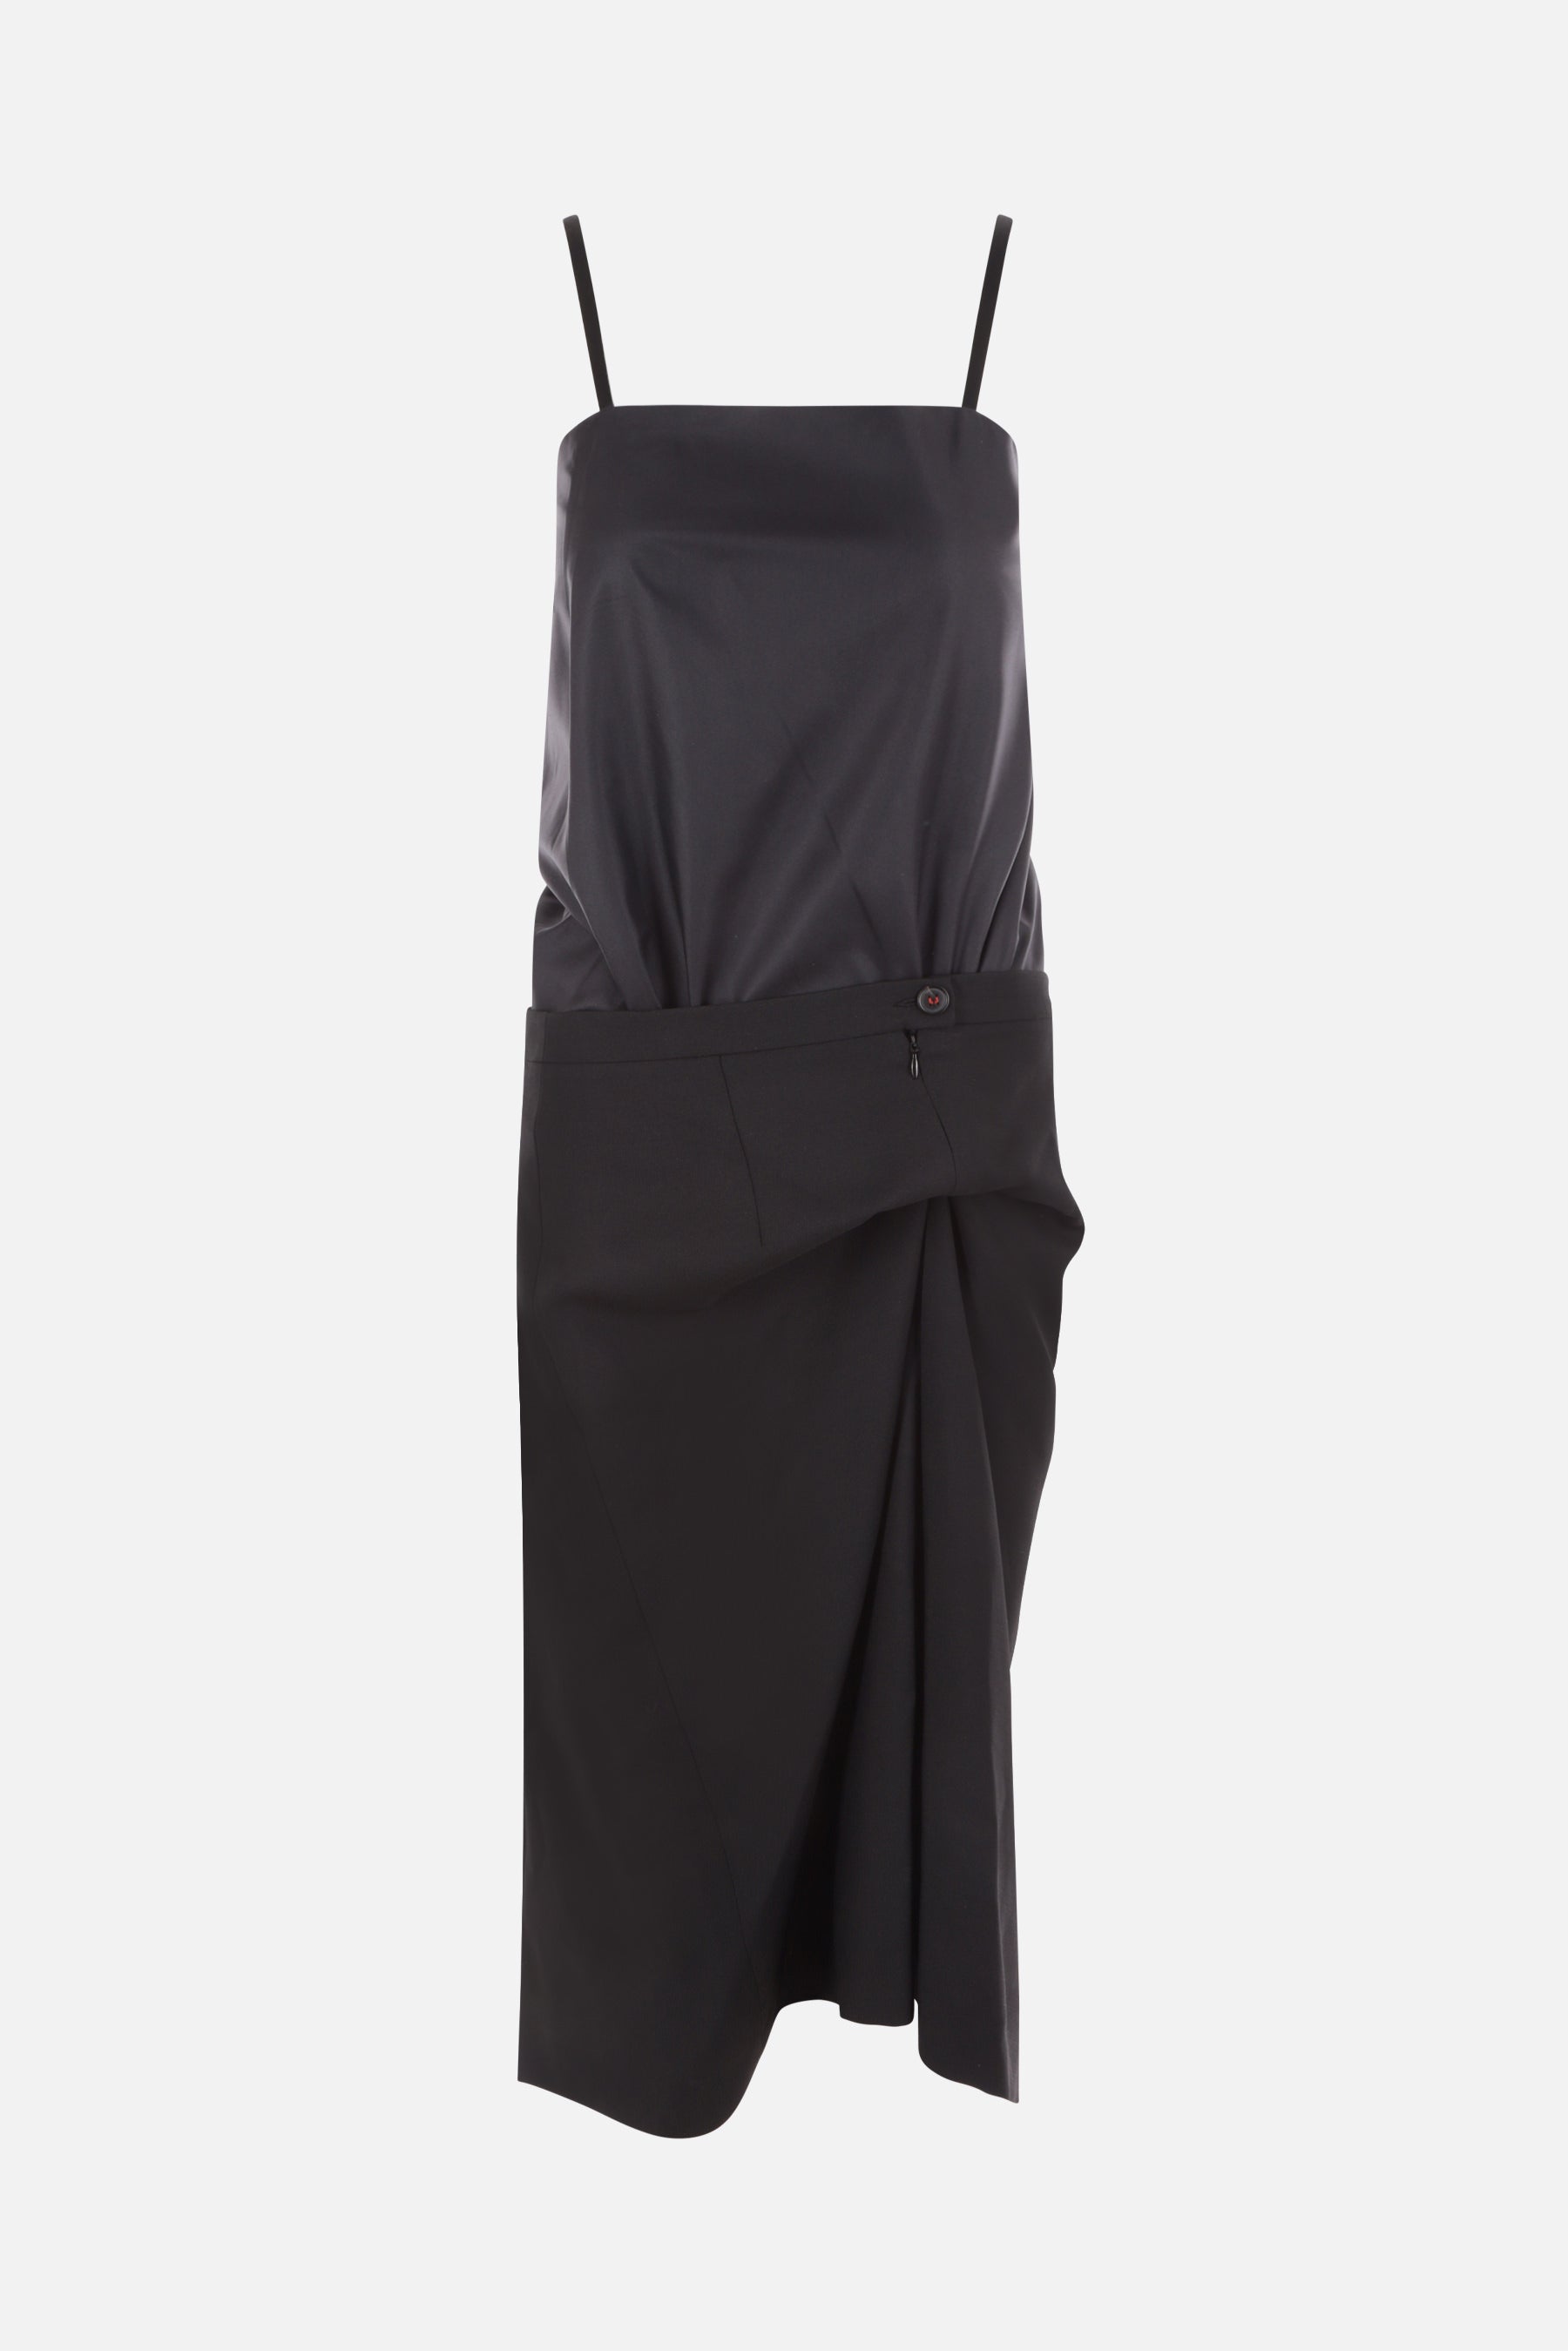 silk dress with wool and mohair asymmetric skirt